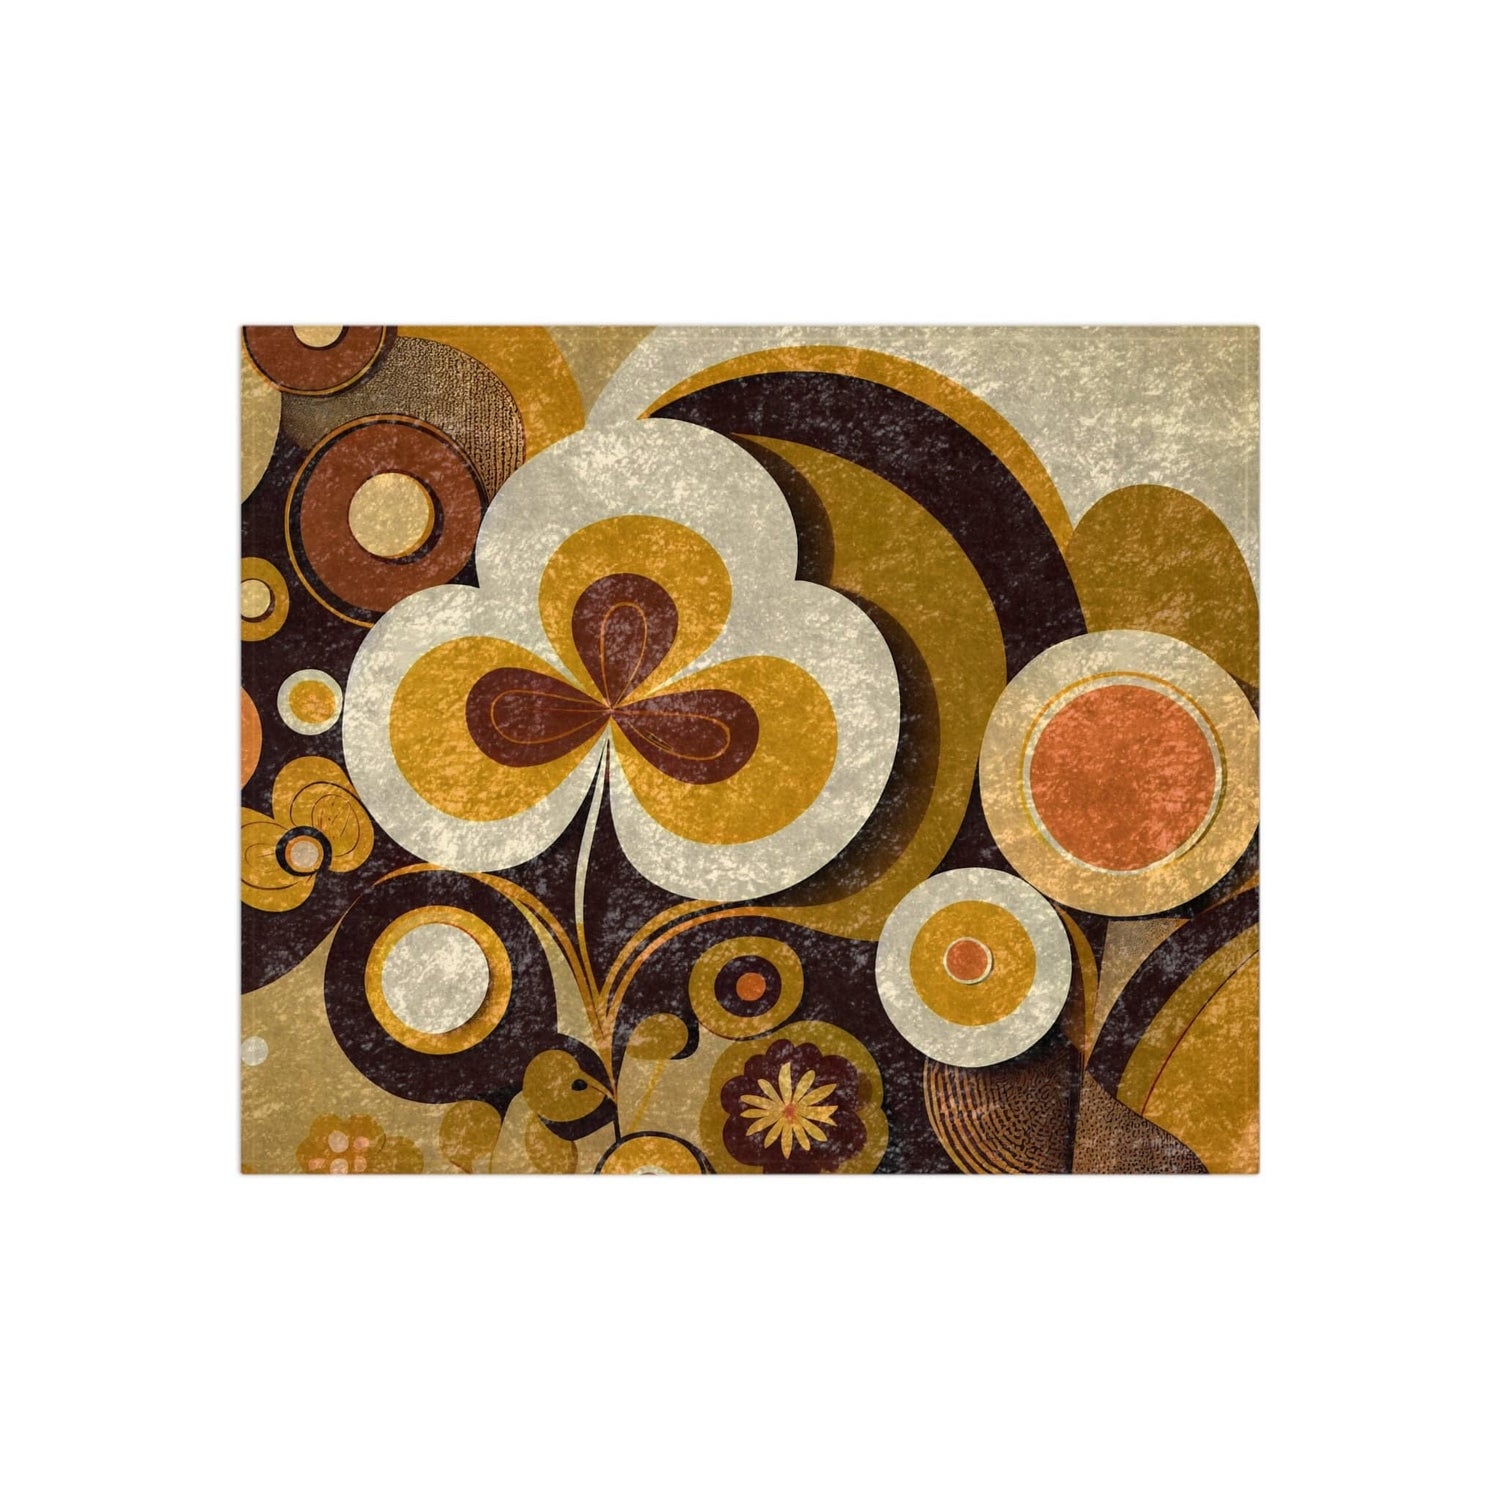 Kate McEnroe New York 60s, 70s Mid Mod Geometric Retro Floral Crushed Velvet Blanket, MCM Groovy Abstract Living Room, Bedroom Decor - 122881223 Blankets 22775086672922856836